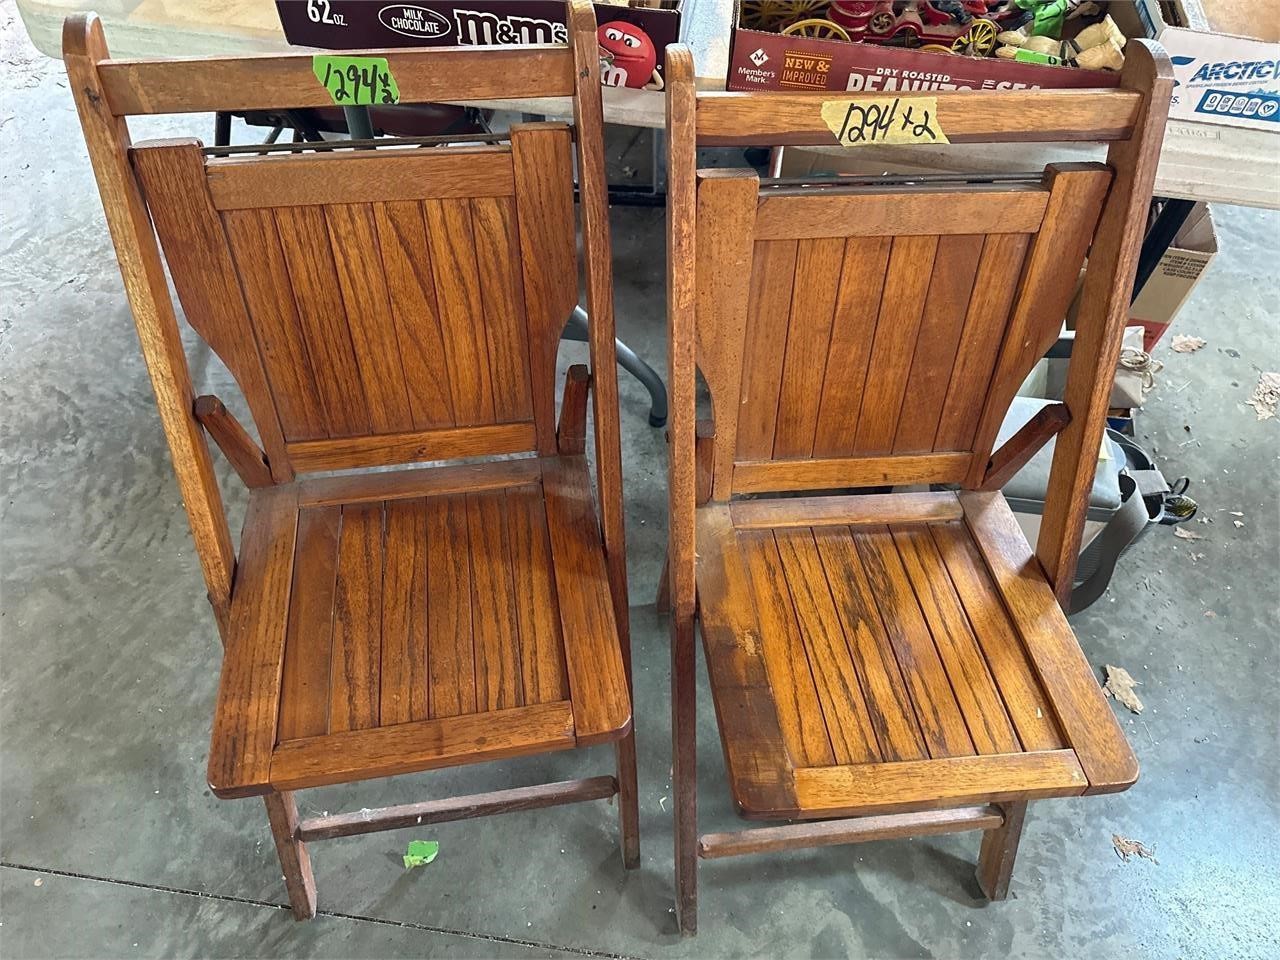 2 Folding wood chairs